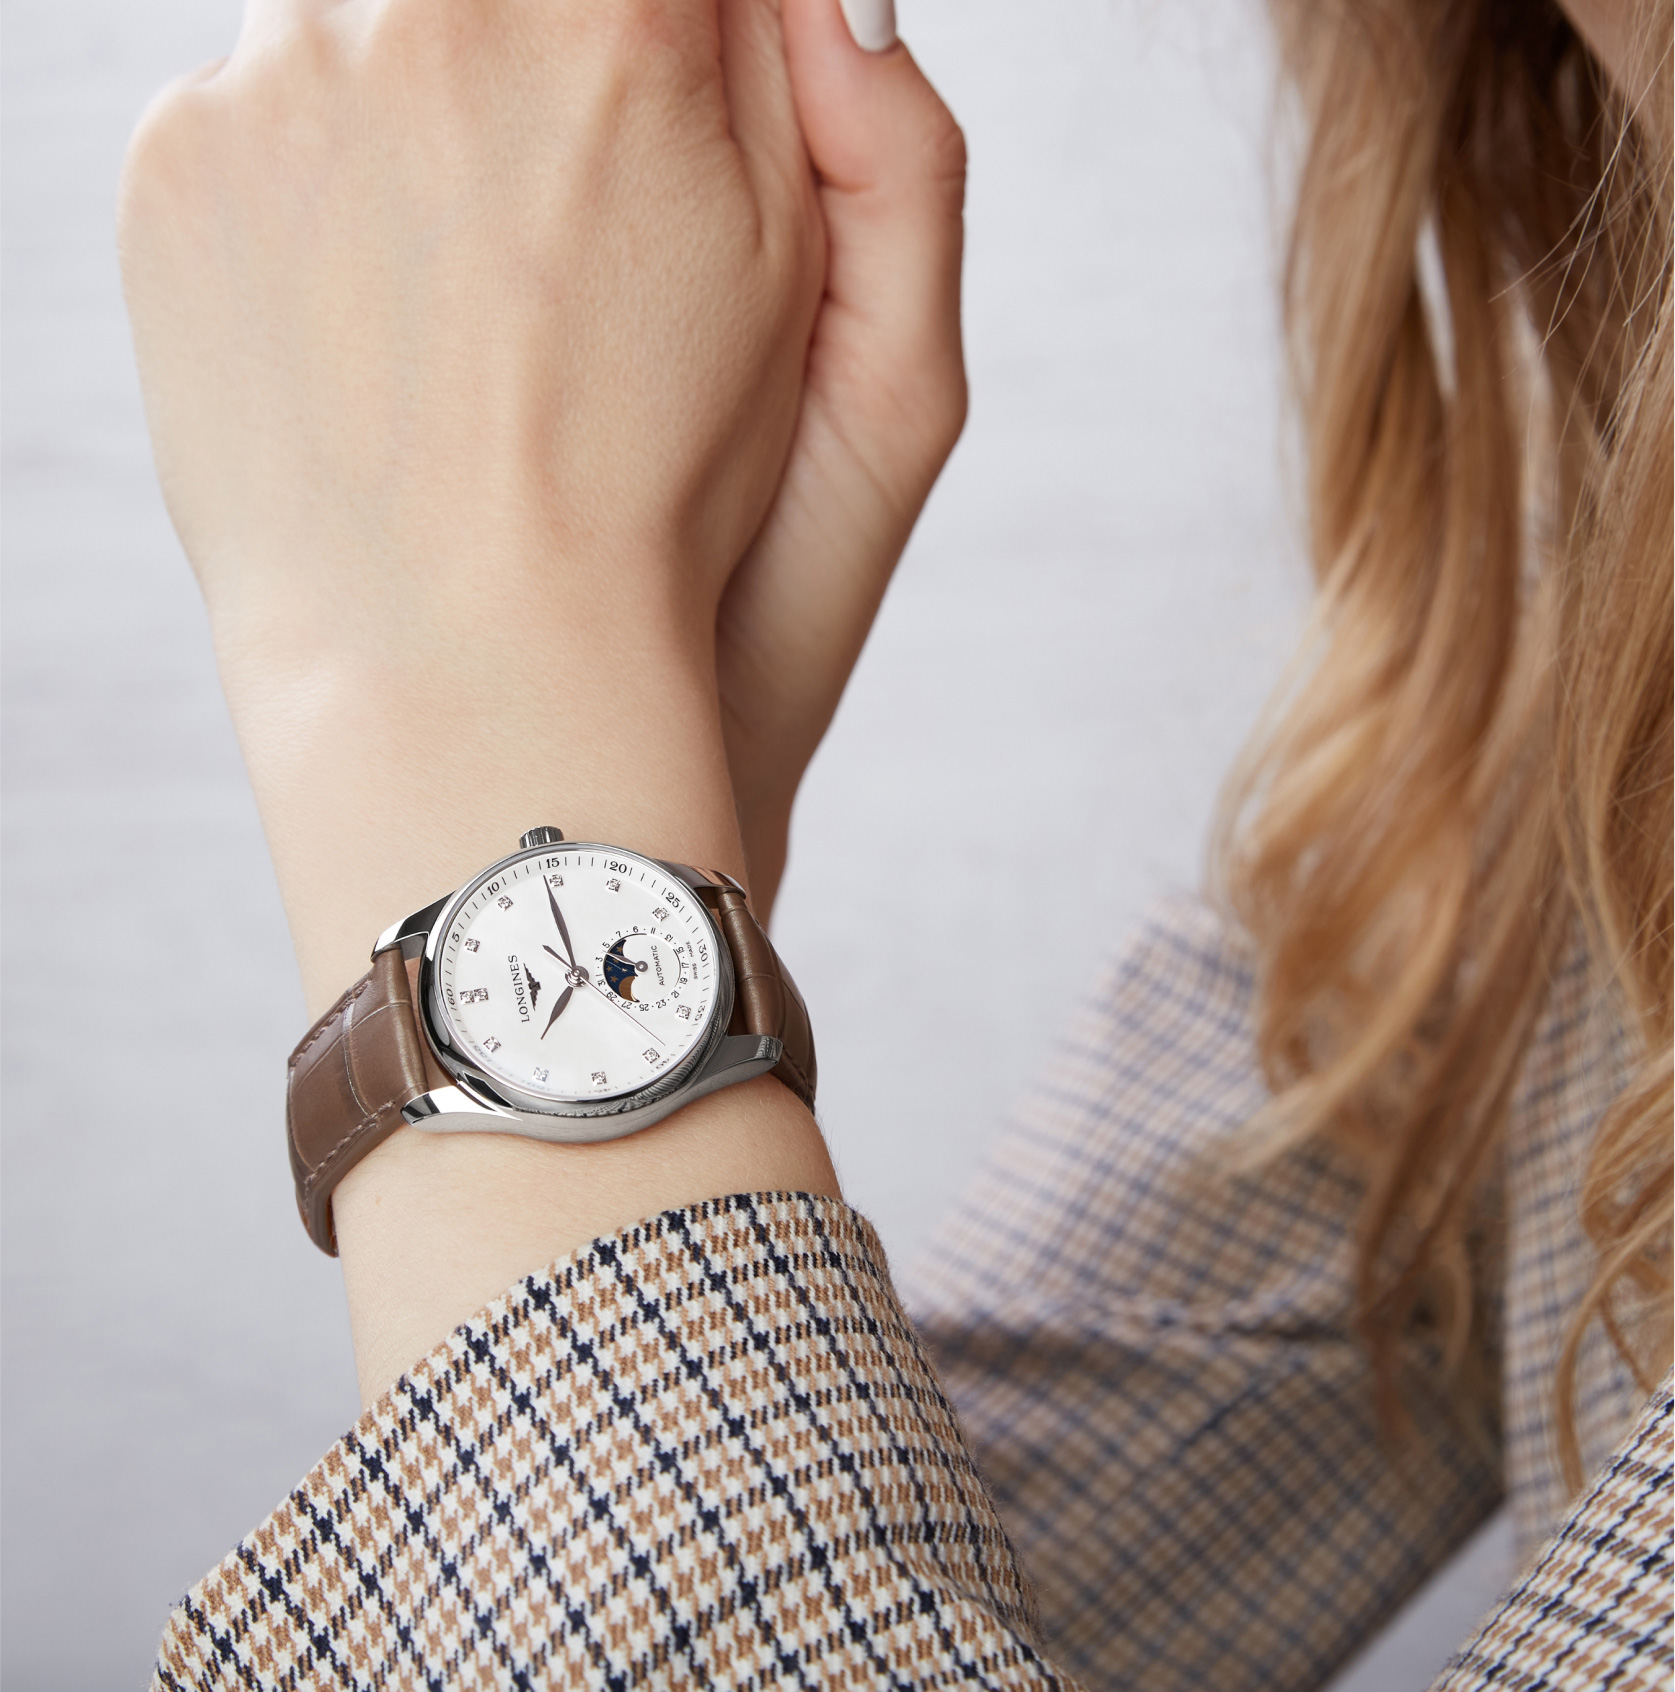 Classic watch on a woman's hand. Rebranding photo set.